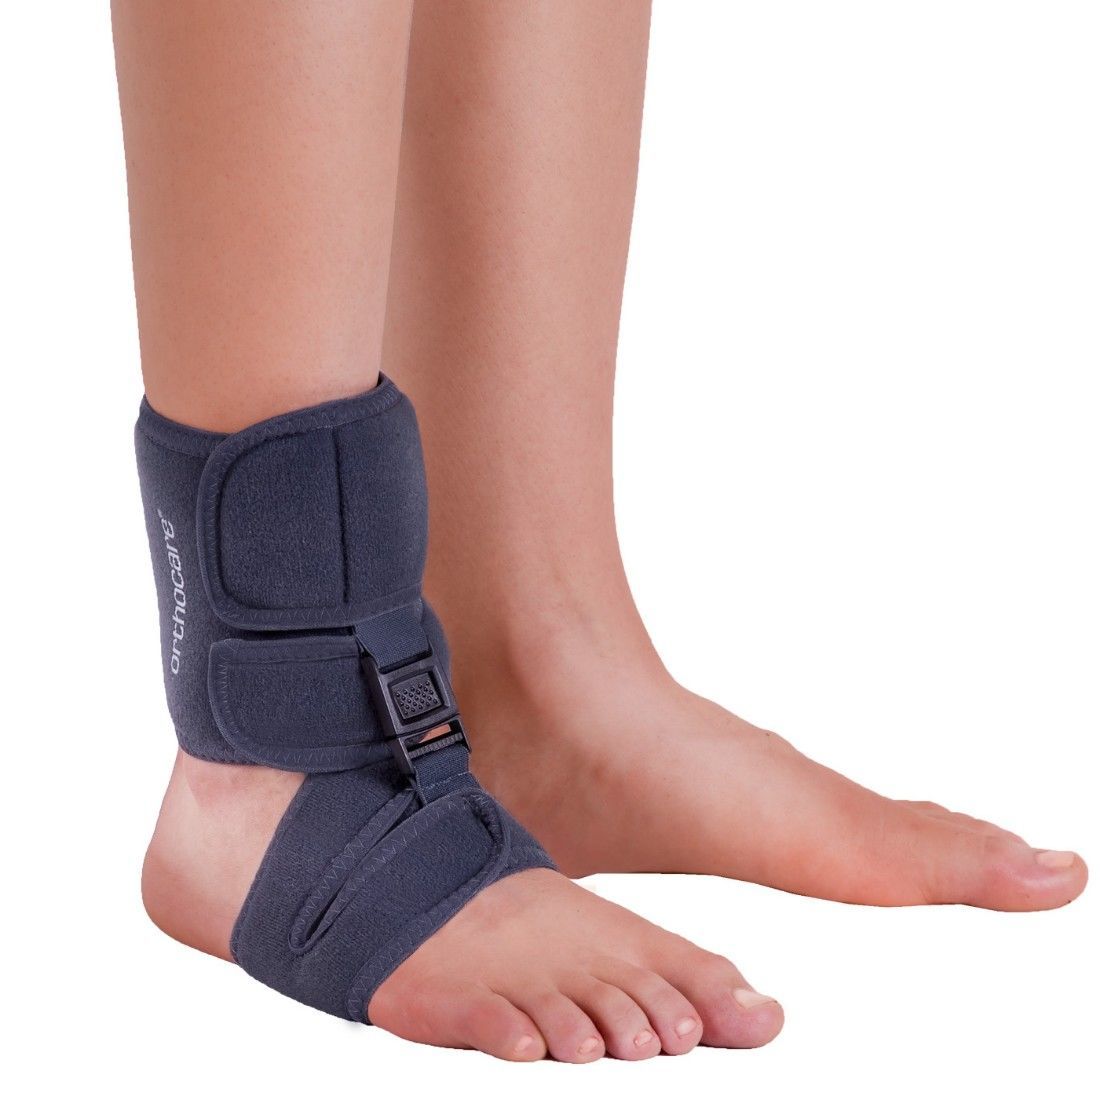 Orthocare Foot lifter (dorsifleksiyon ayak bileği ortezi)